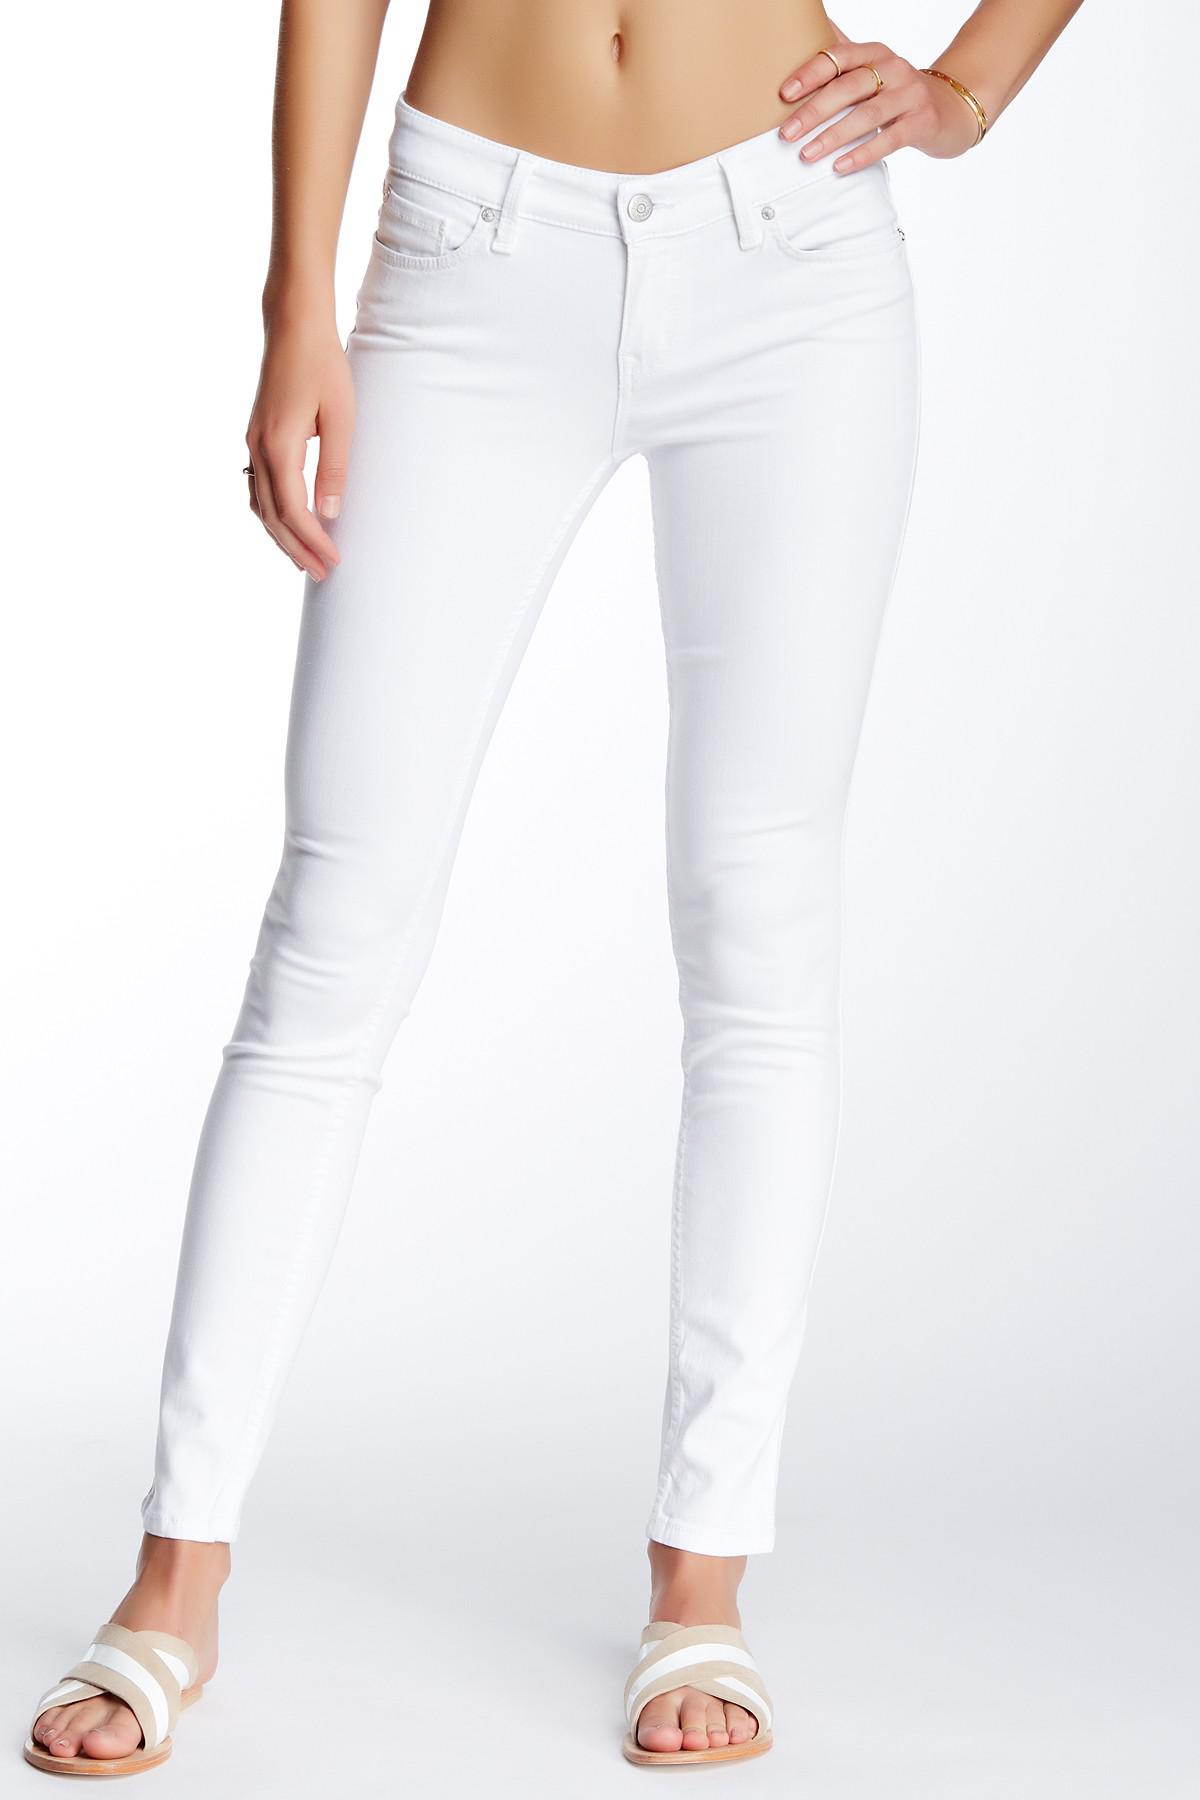 level 99 white jeans